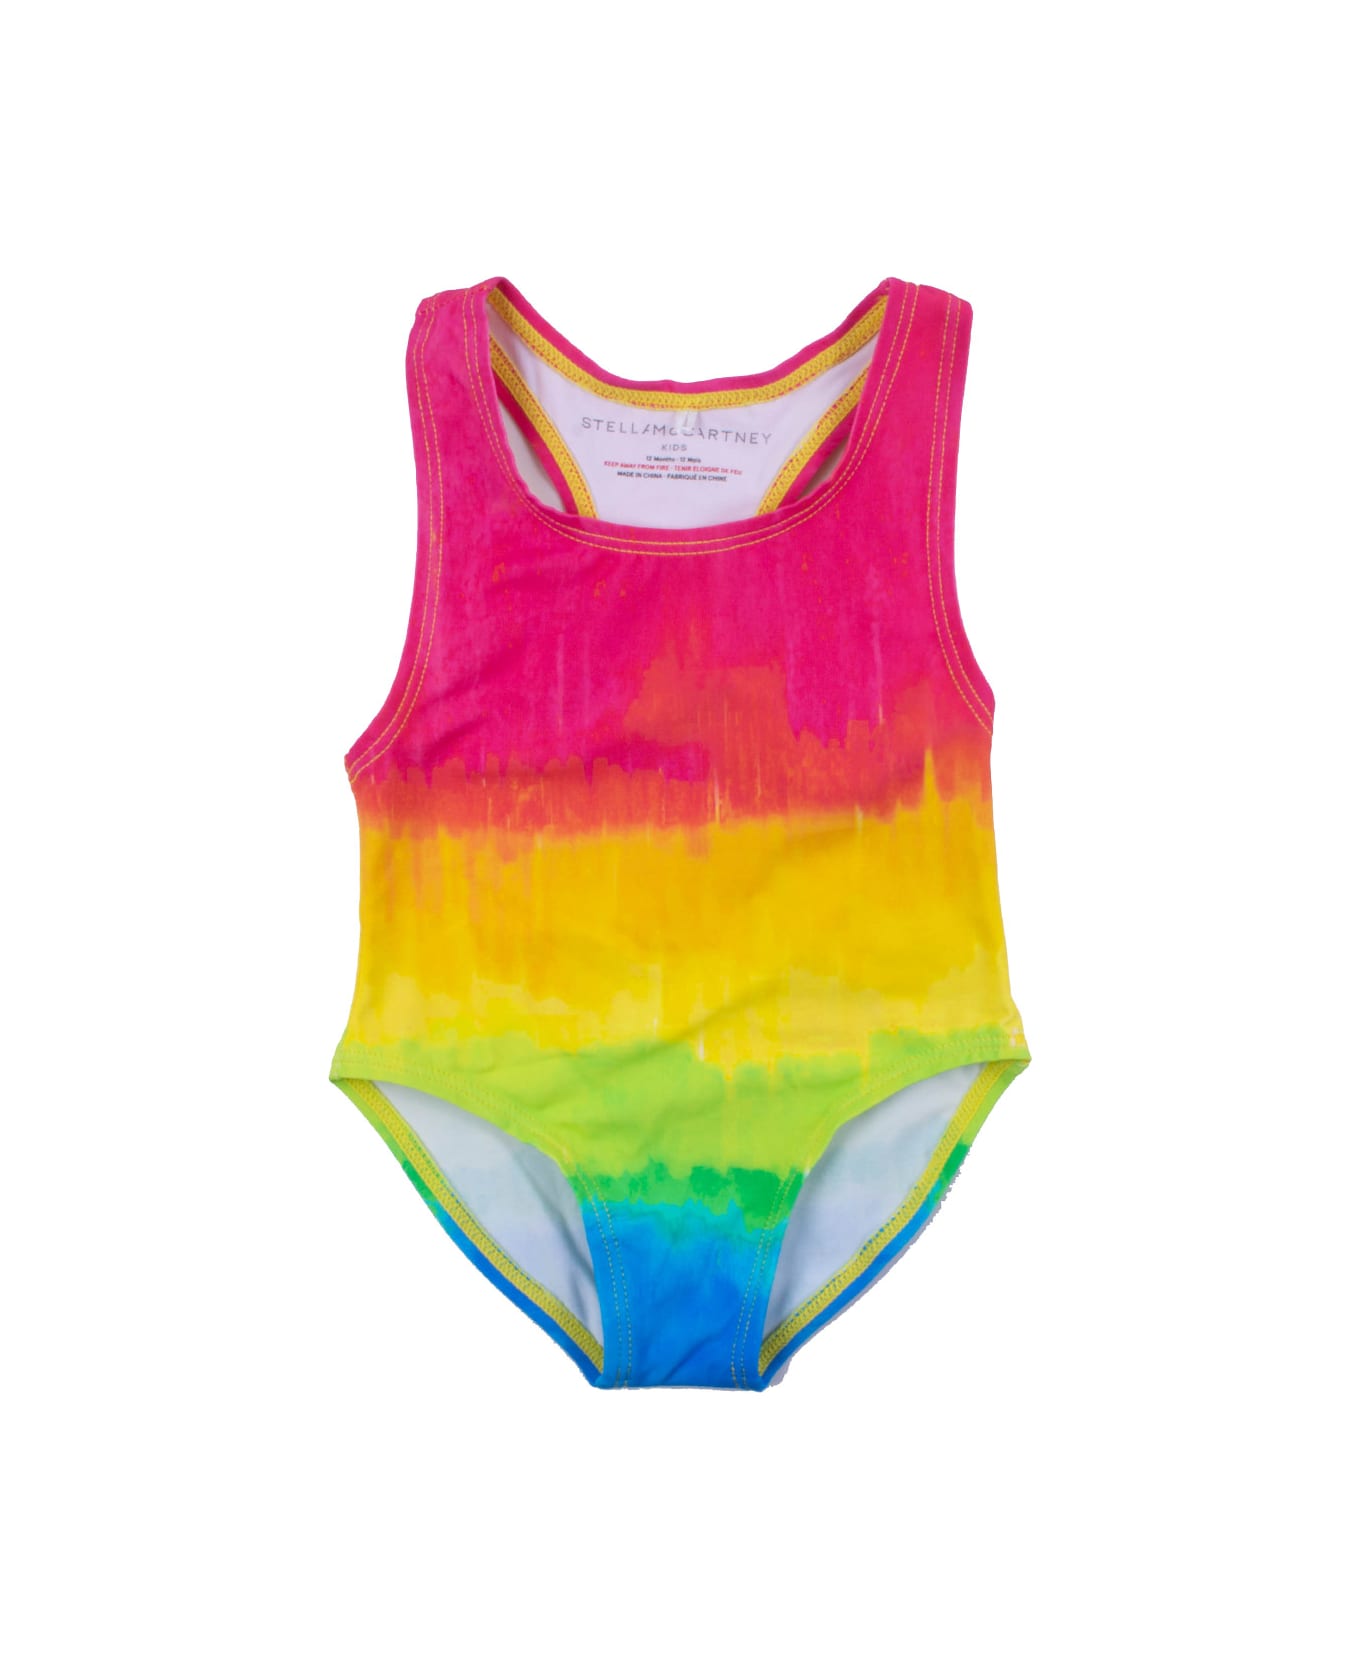 Stella McCartney Kids Nylon One Piece Swimsuit - Multicolor 水着